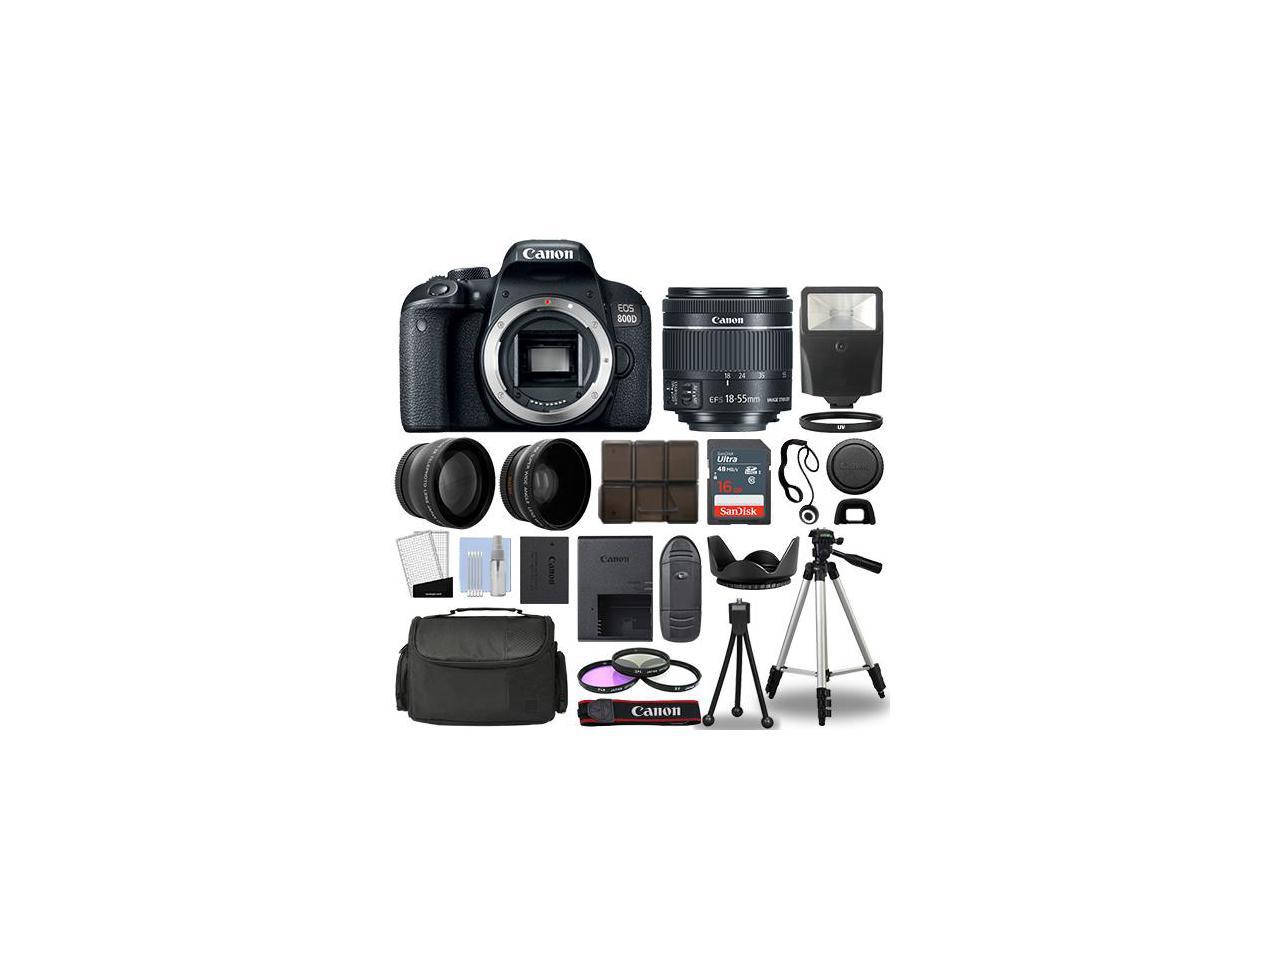 Canon EOS 800D SLR Camera Body + 3 Lens Kit 18-55mm IS STM + 16GB + Flash & More